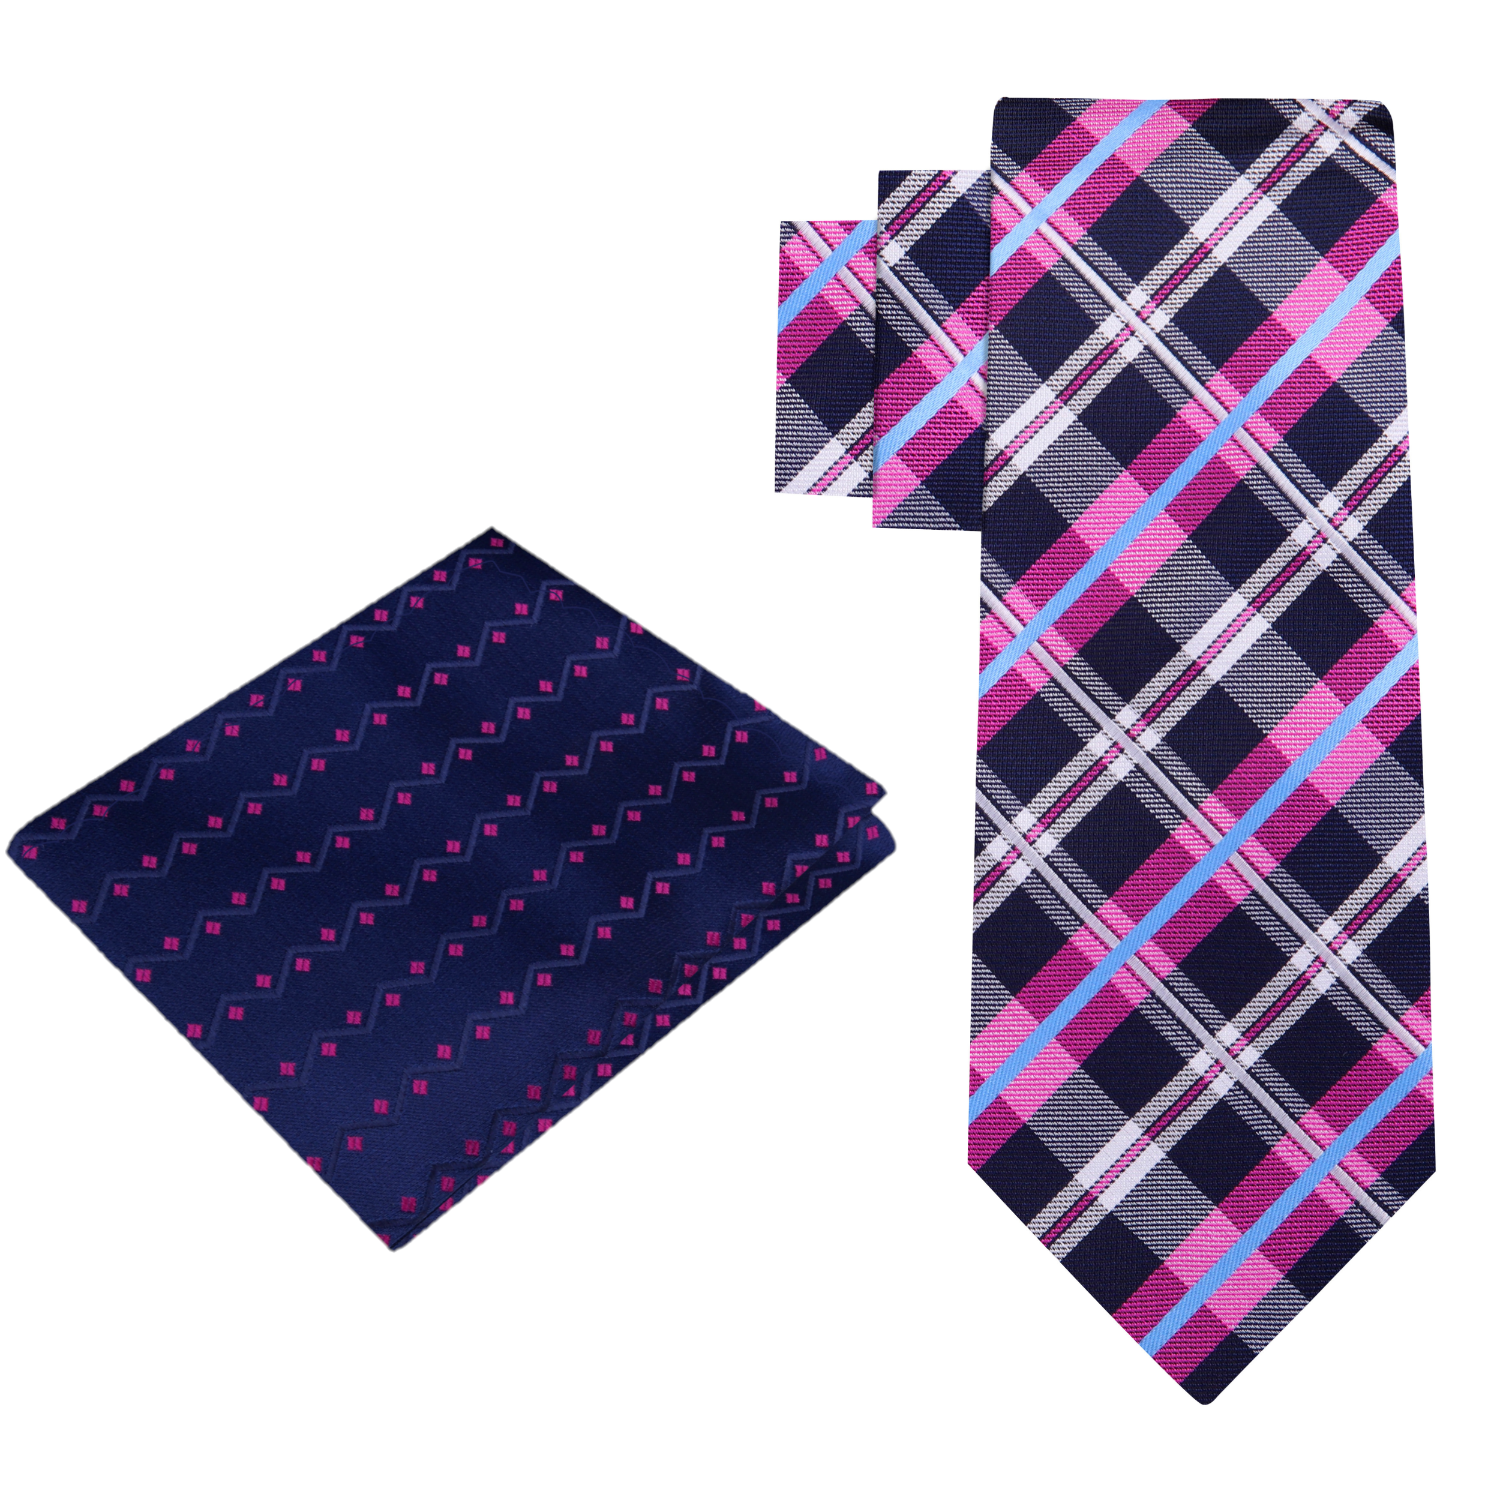 View 2: Dark Blue, Purple and Light Blue Plaid Necktie & Blue pink Check Square